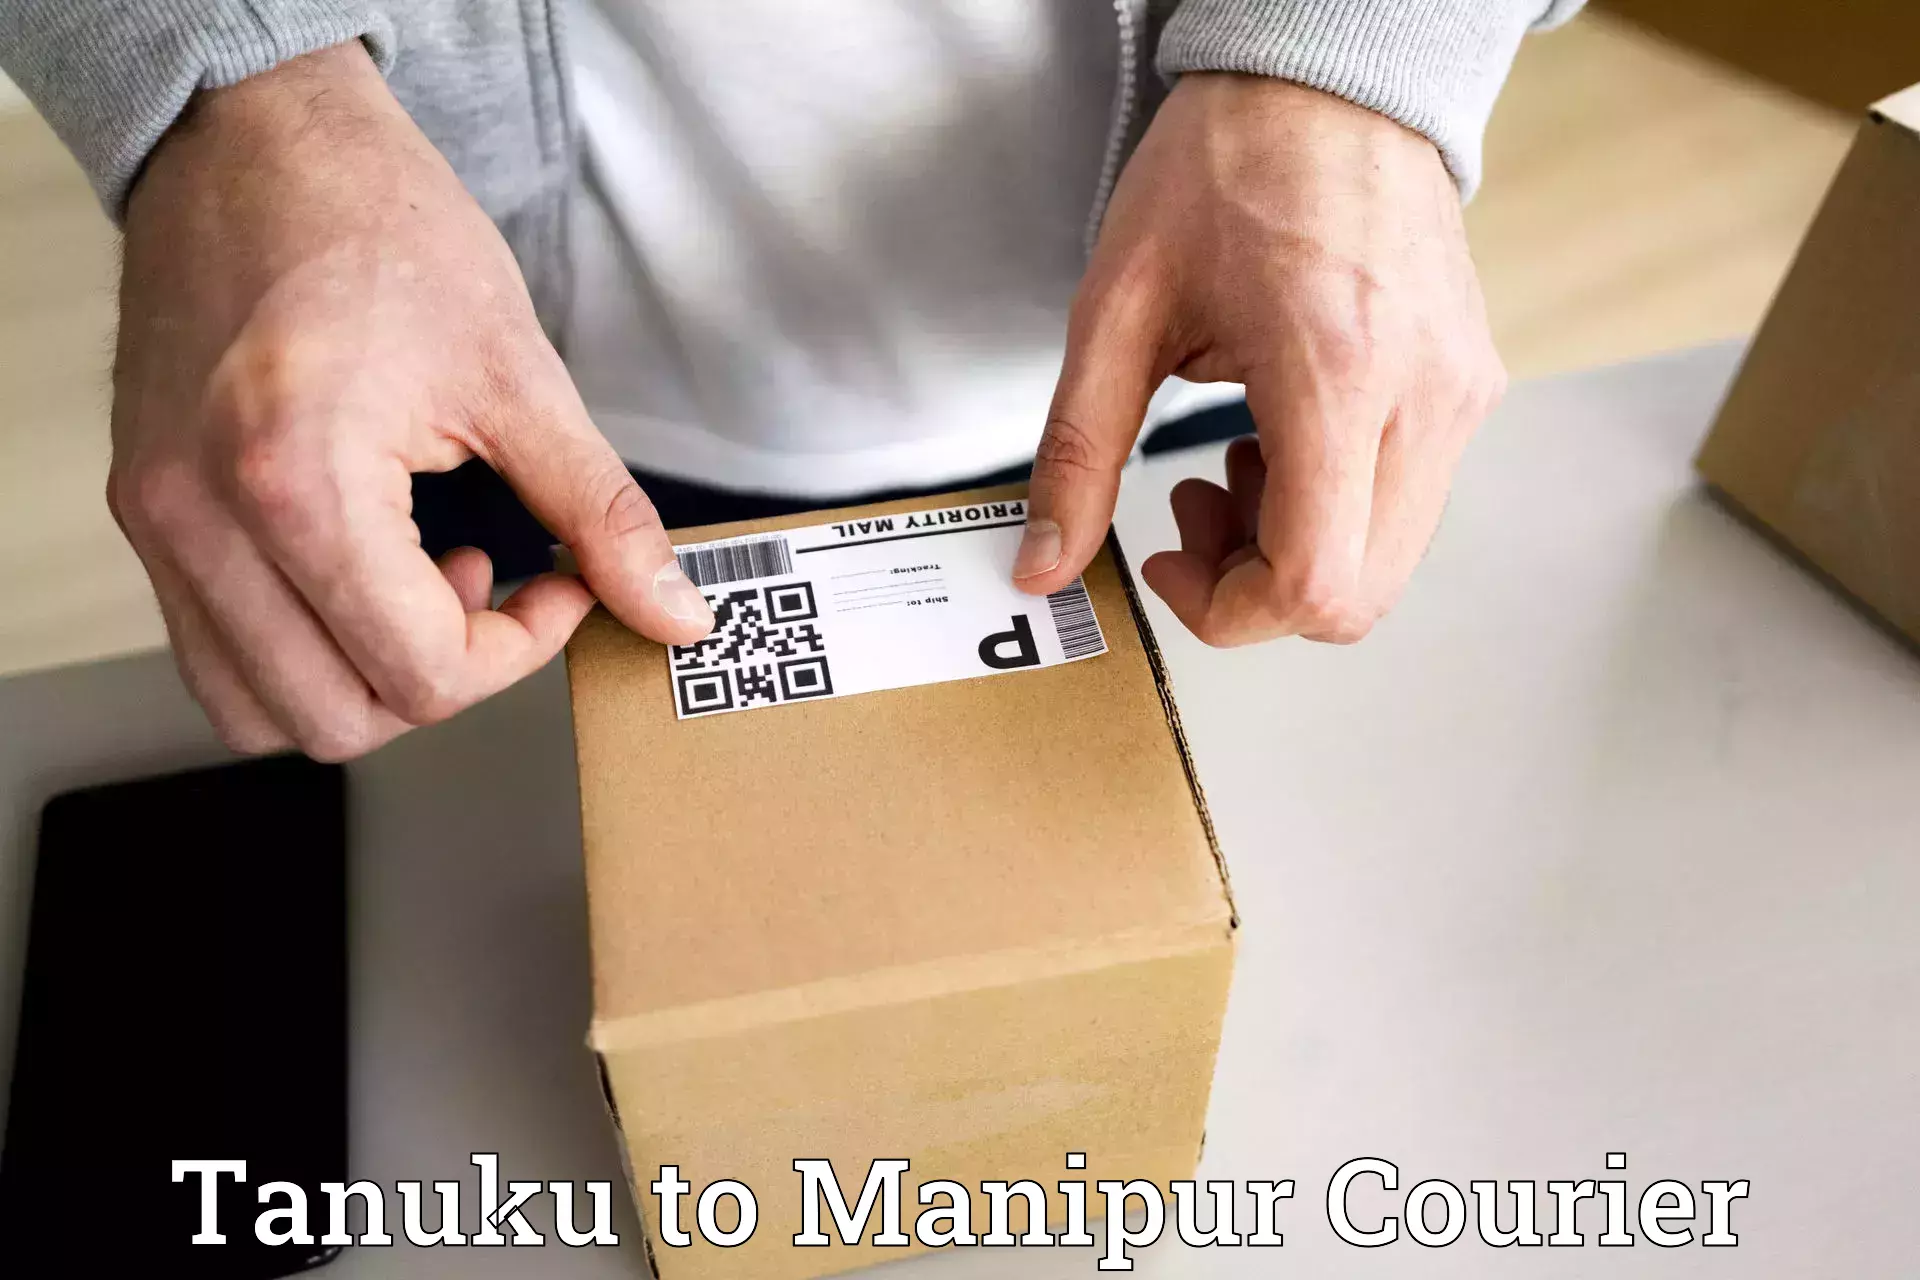 Bulk courier orders Tanuku to Manipur